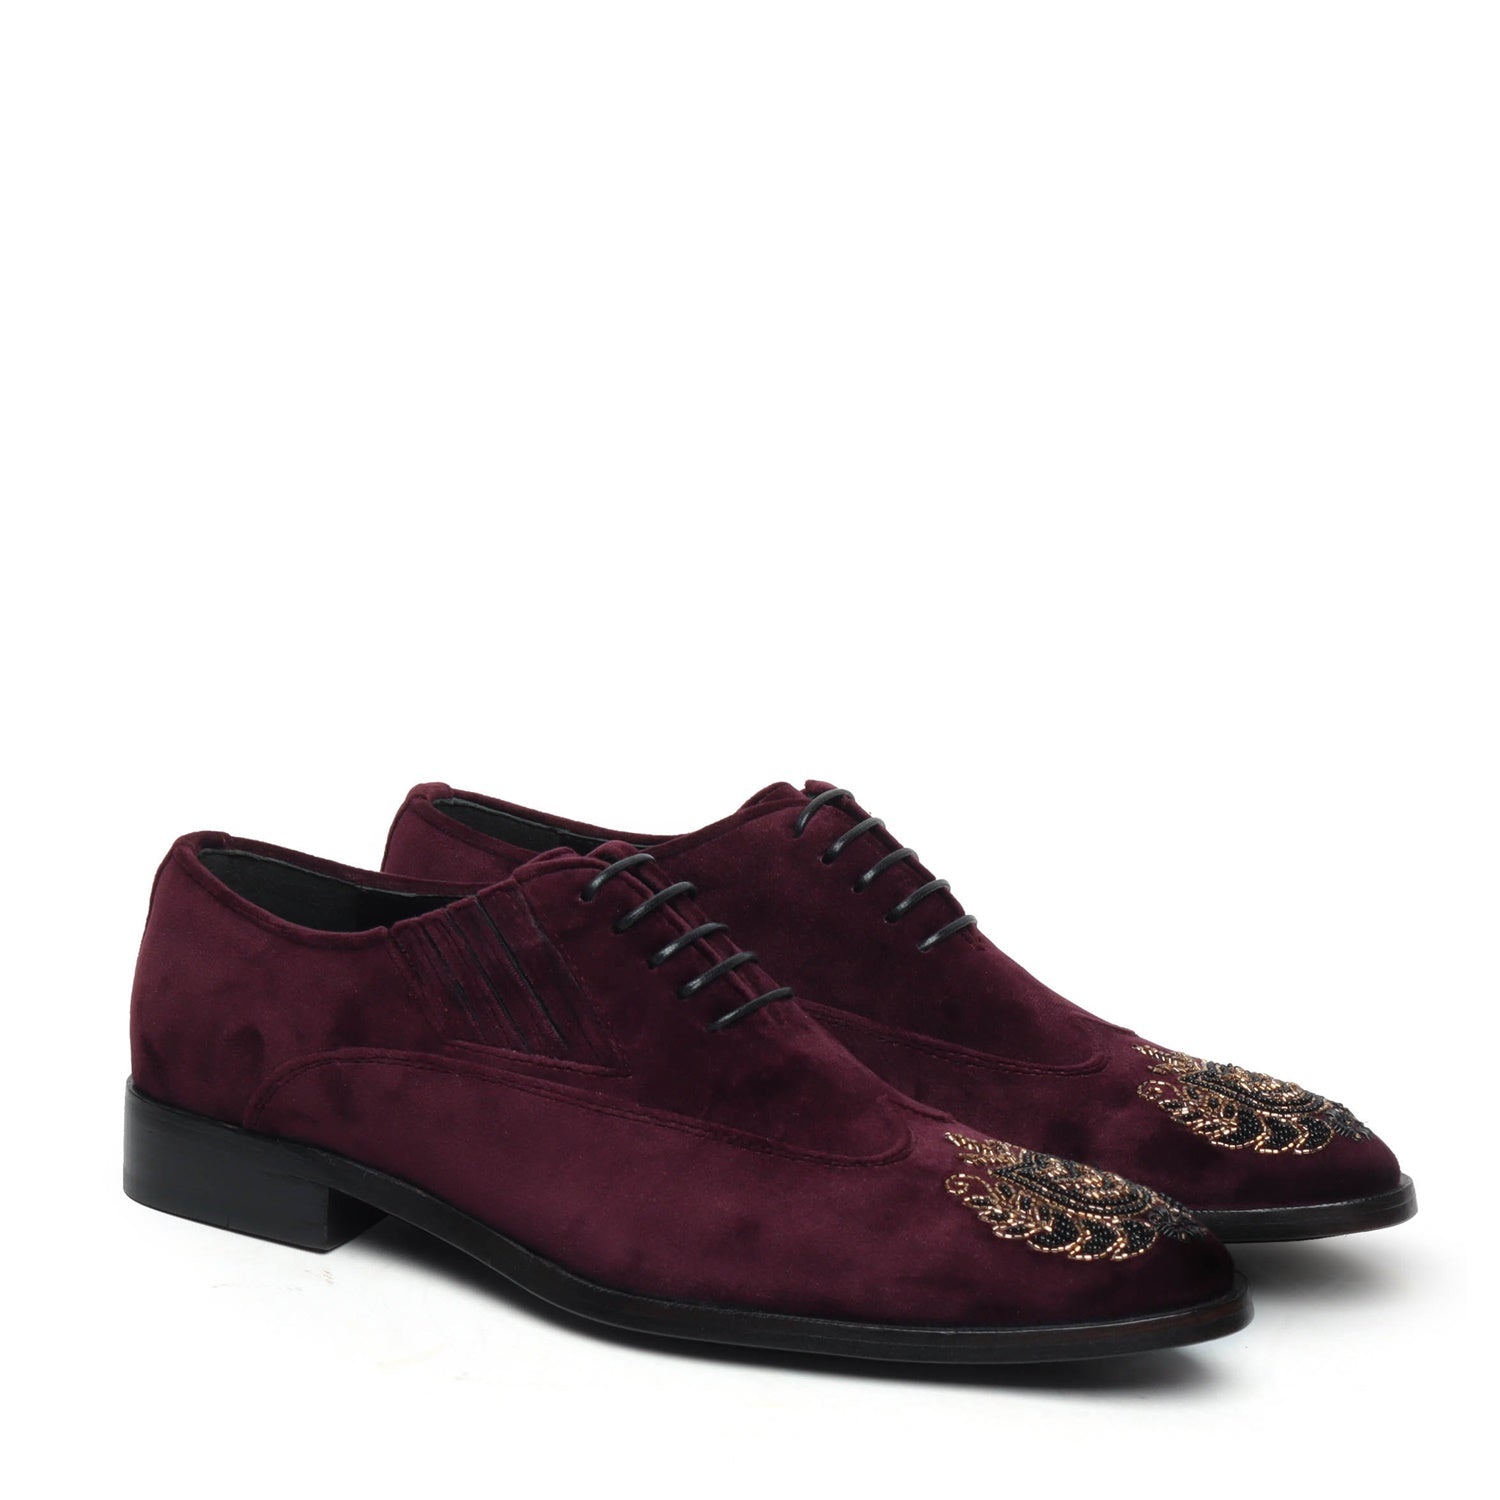 Zardosi Wingtip Purple Velvet Formal Shoes by Brune & Bareskin